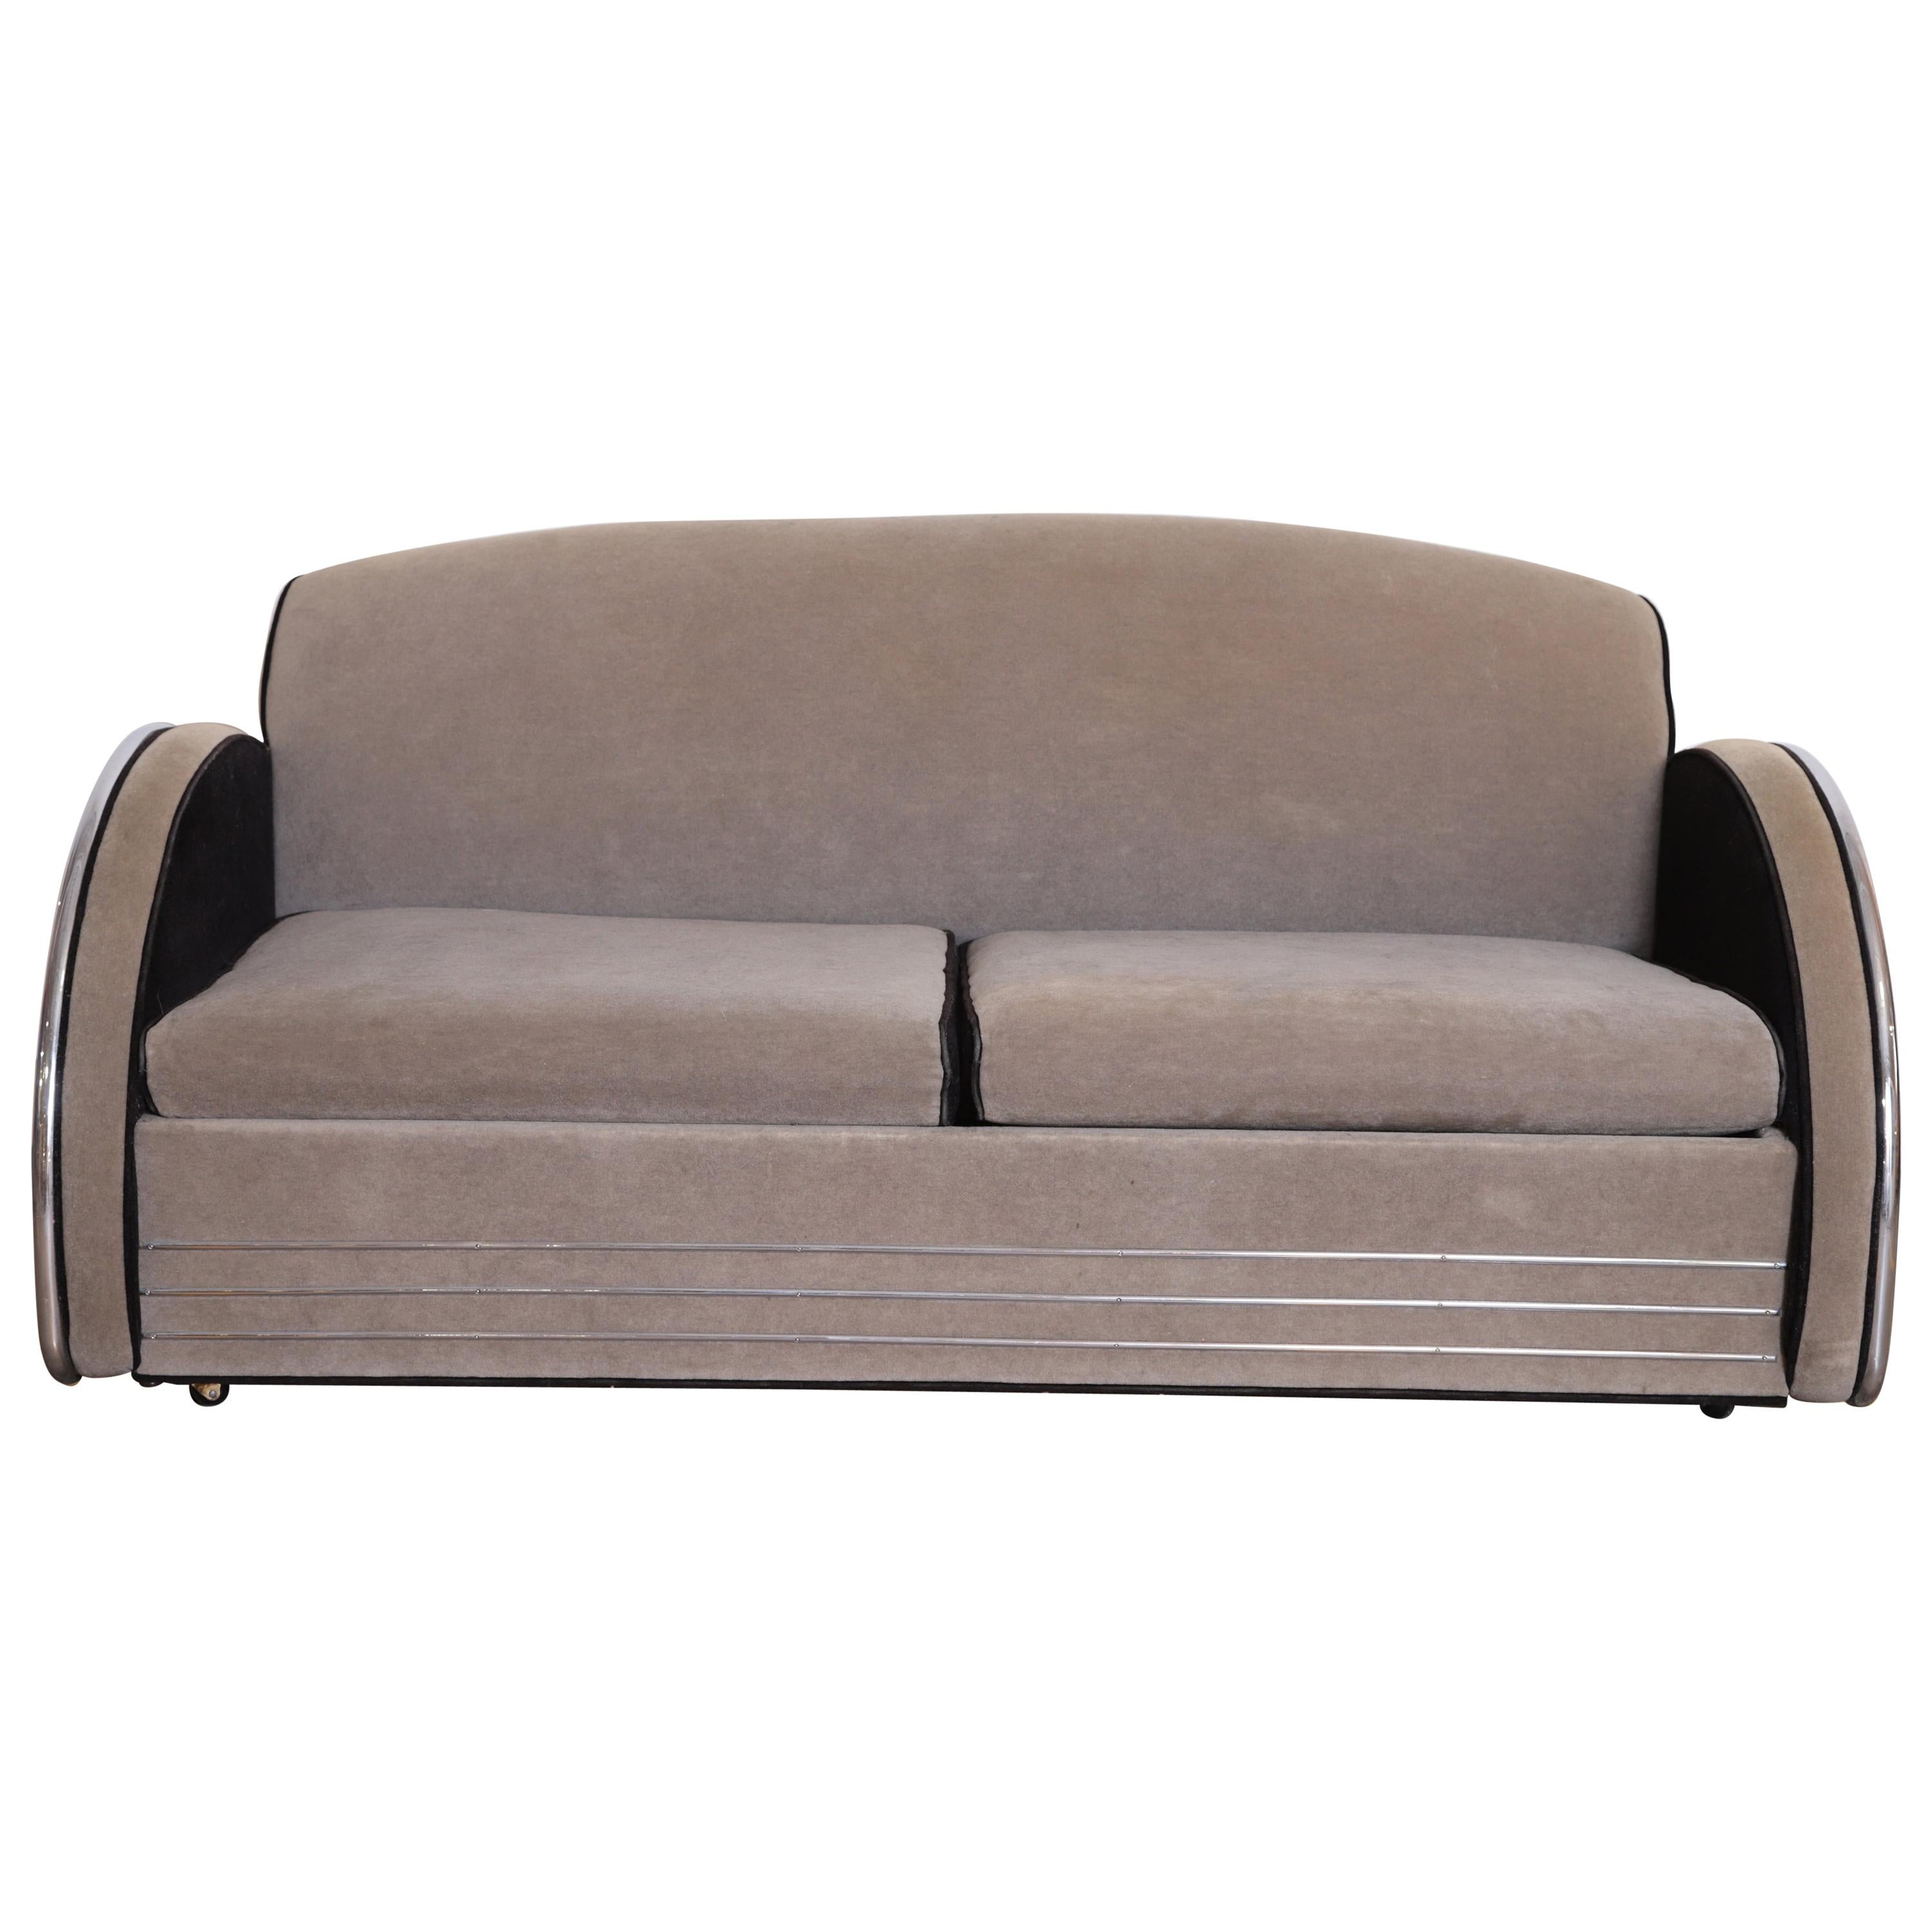 Machine Age Art Deco Jazz Sofa, Manner of Donald Deskey, Royalchrome